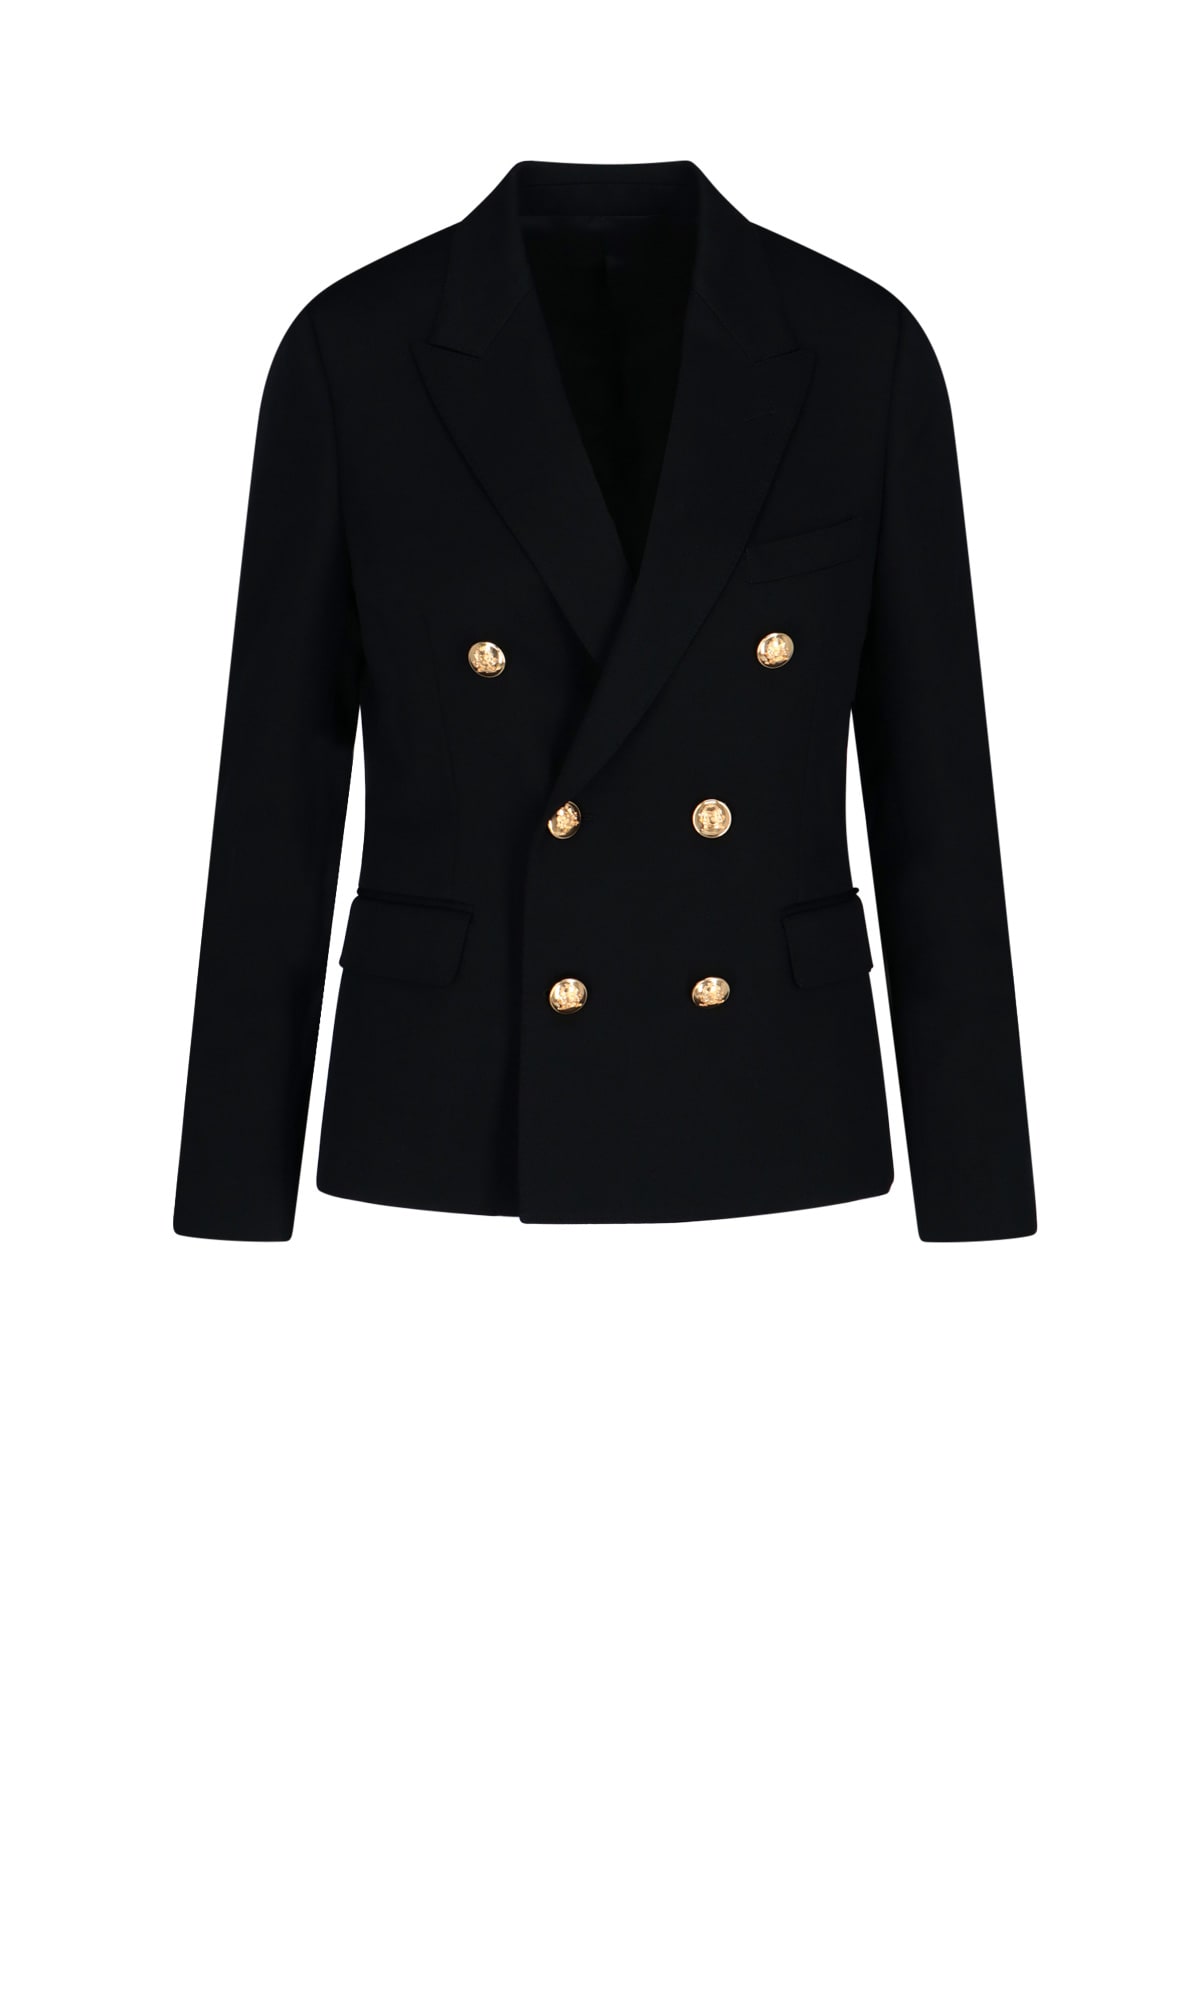 Celine Short Jacket In Black With Golden Buttons | ModeSens